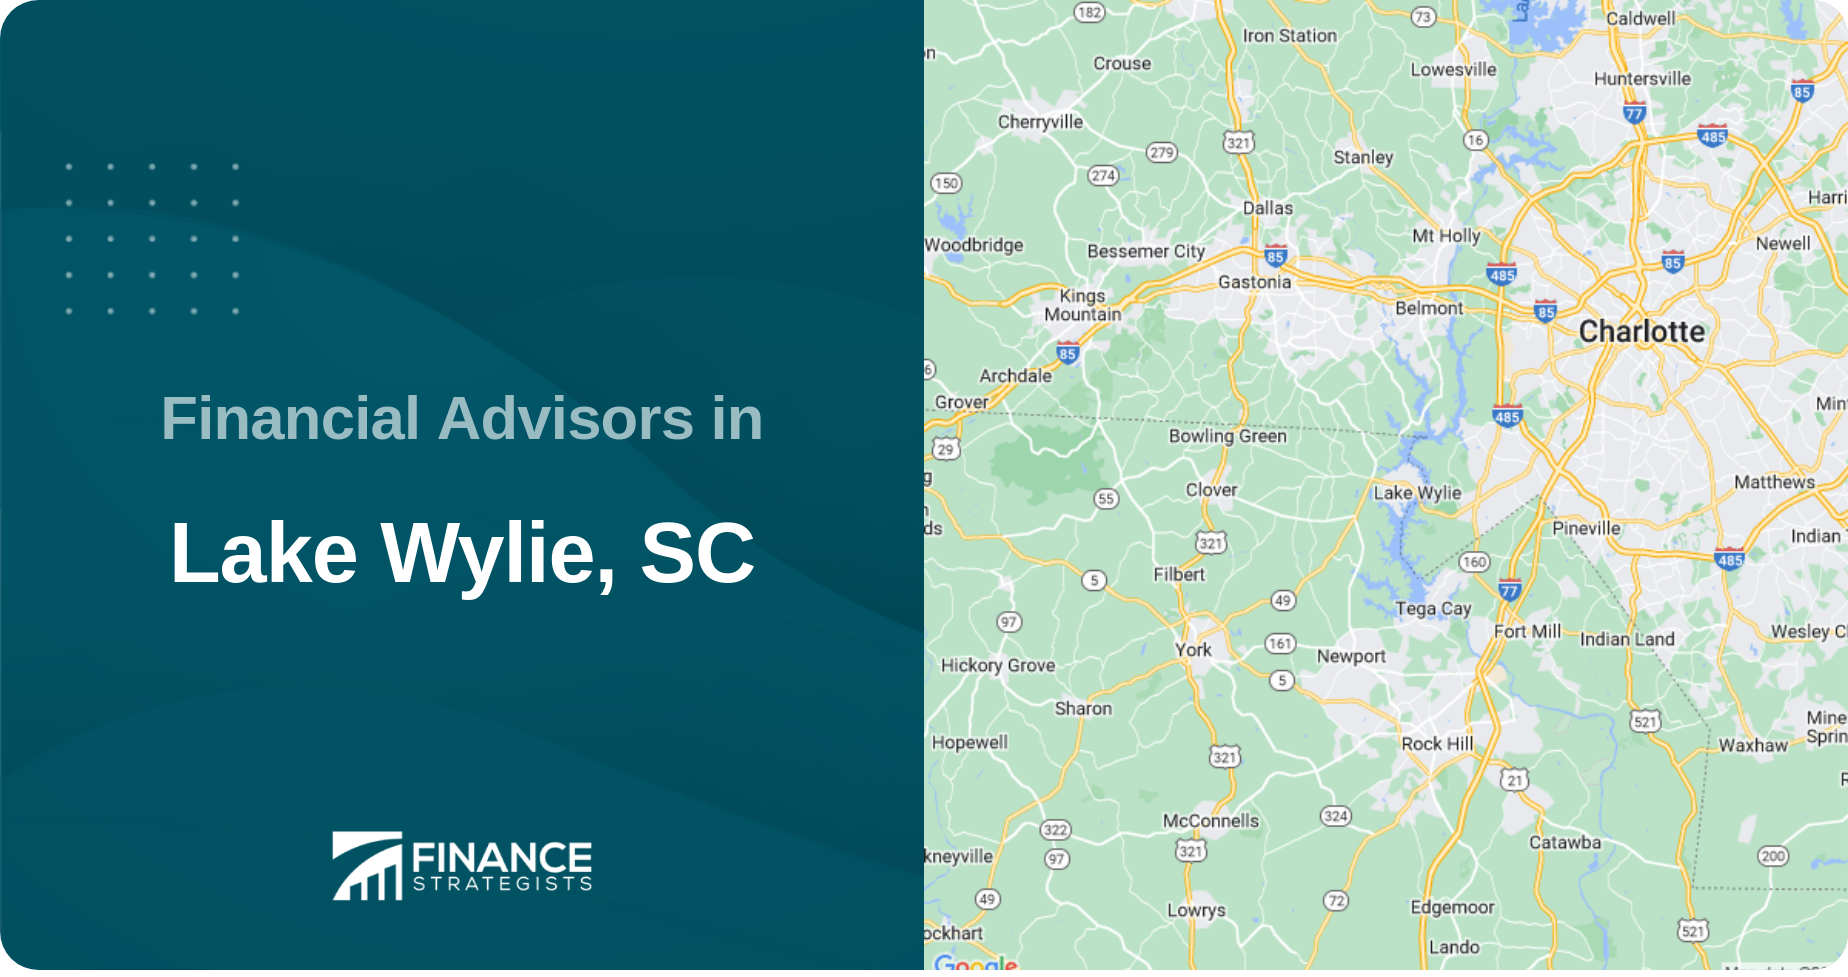 Financial Advisors in Lake Wylie, SC